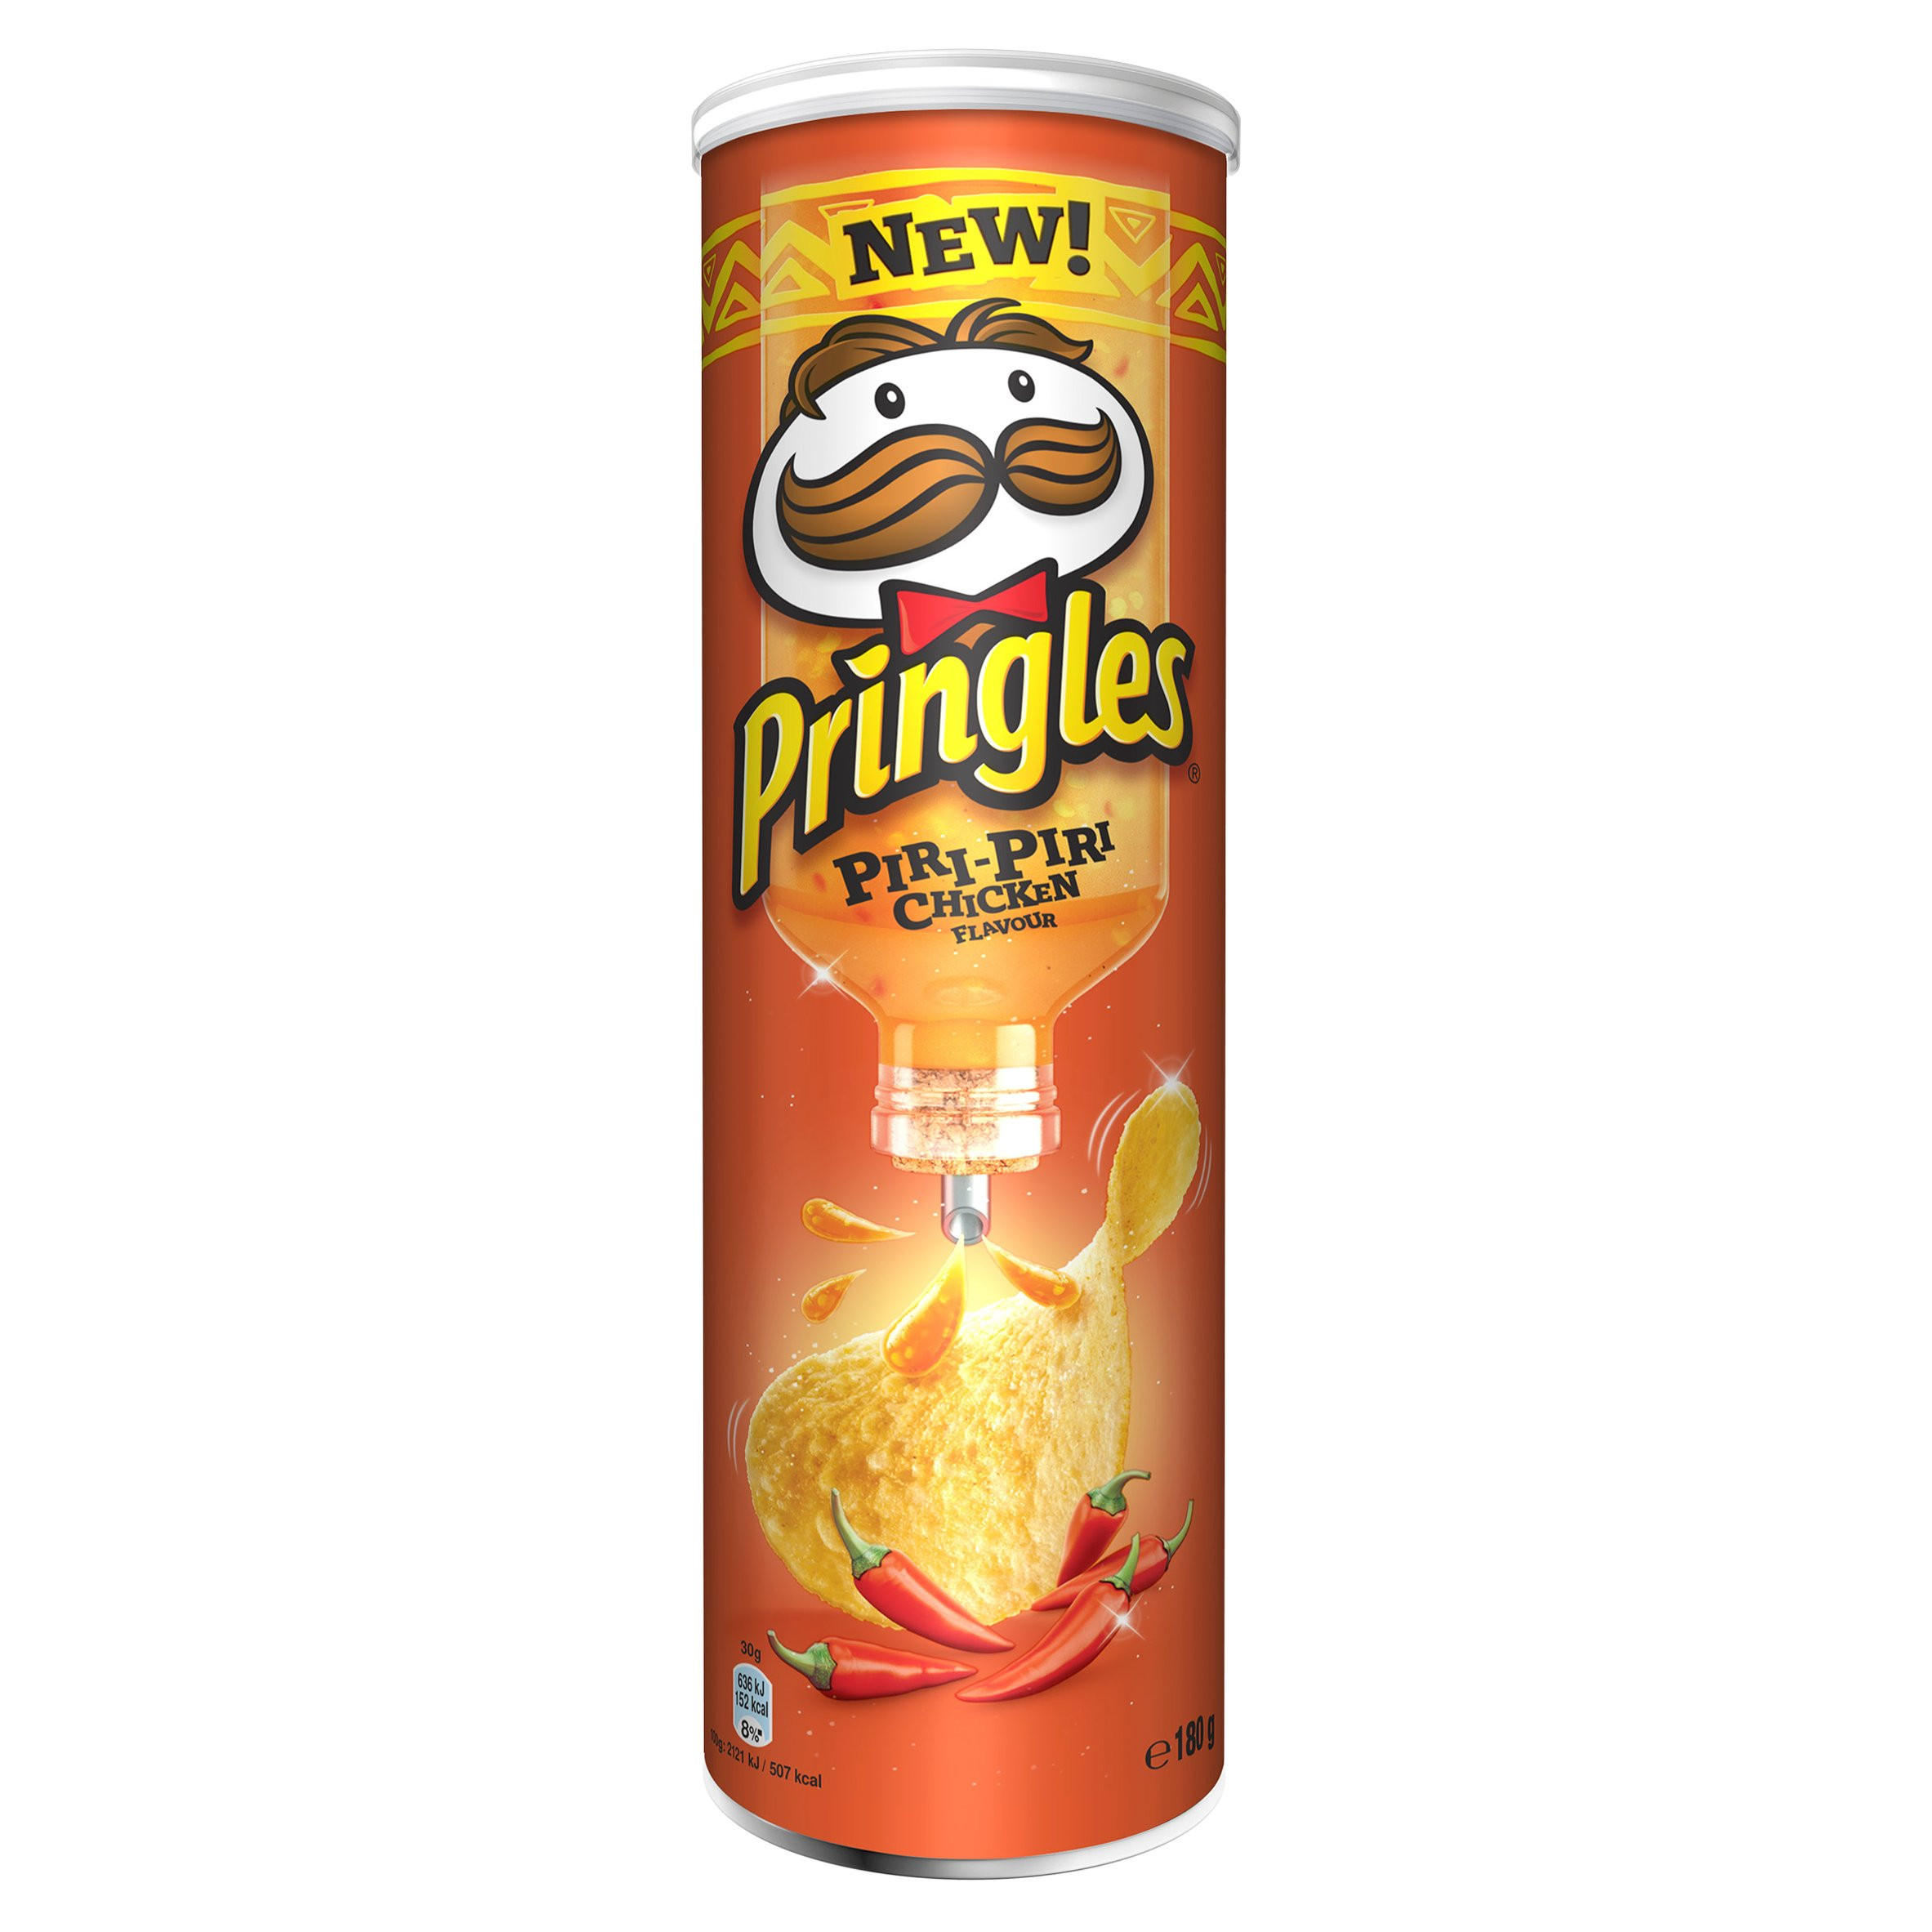 Pringles Piri-Piri Chicken Flavour 180g | Sharing Crisps | Iceland Foods